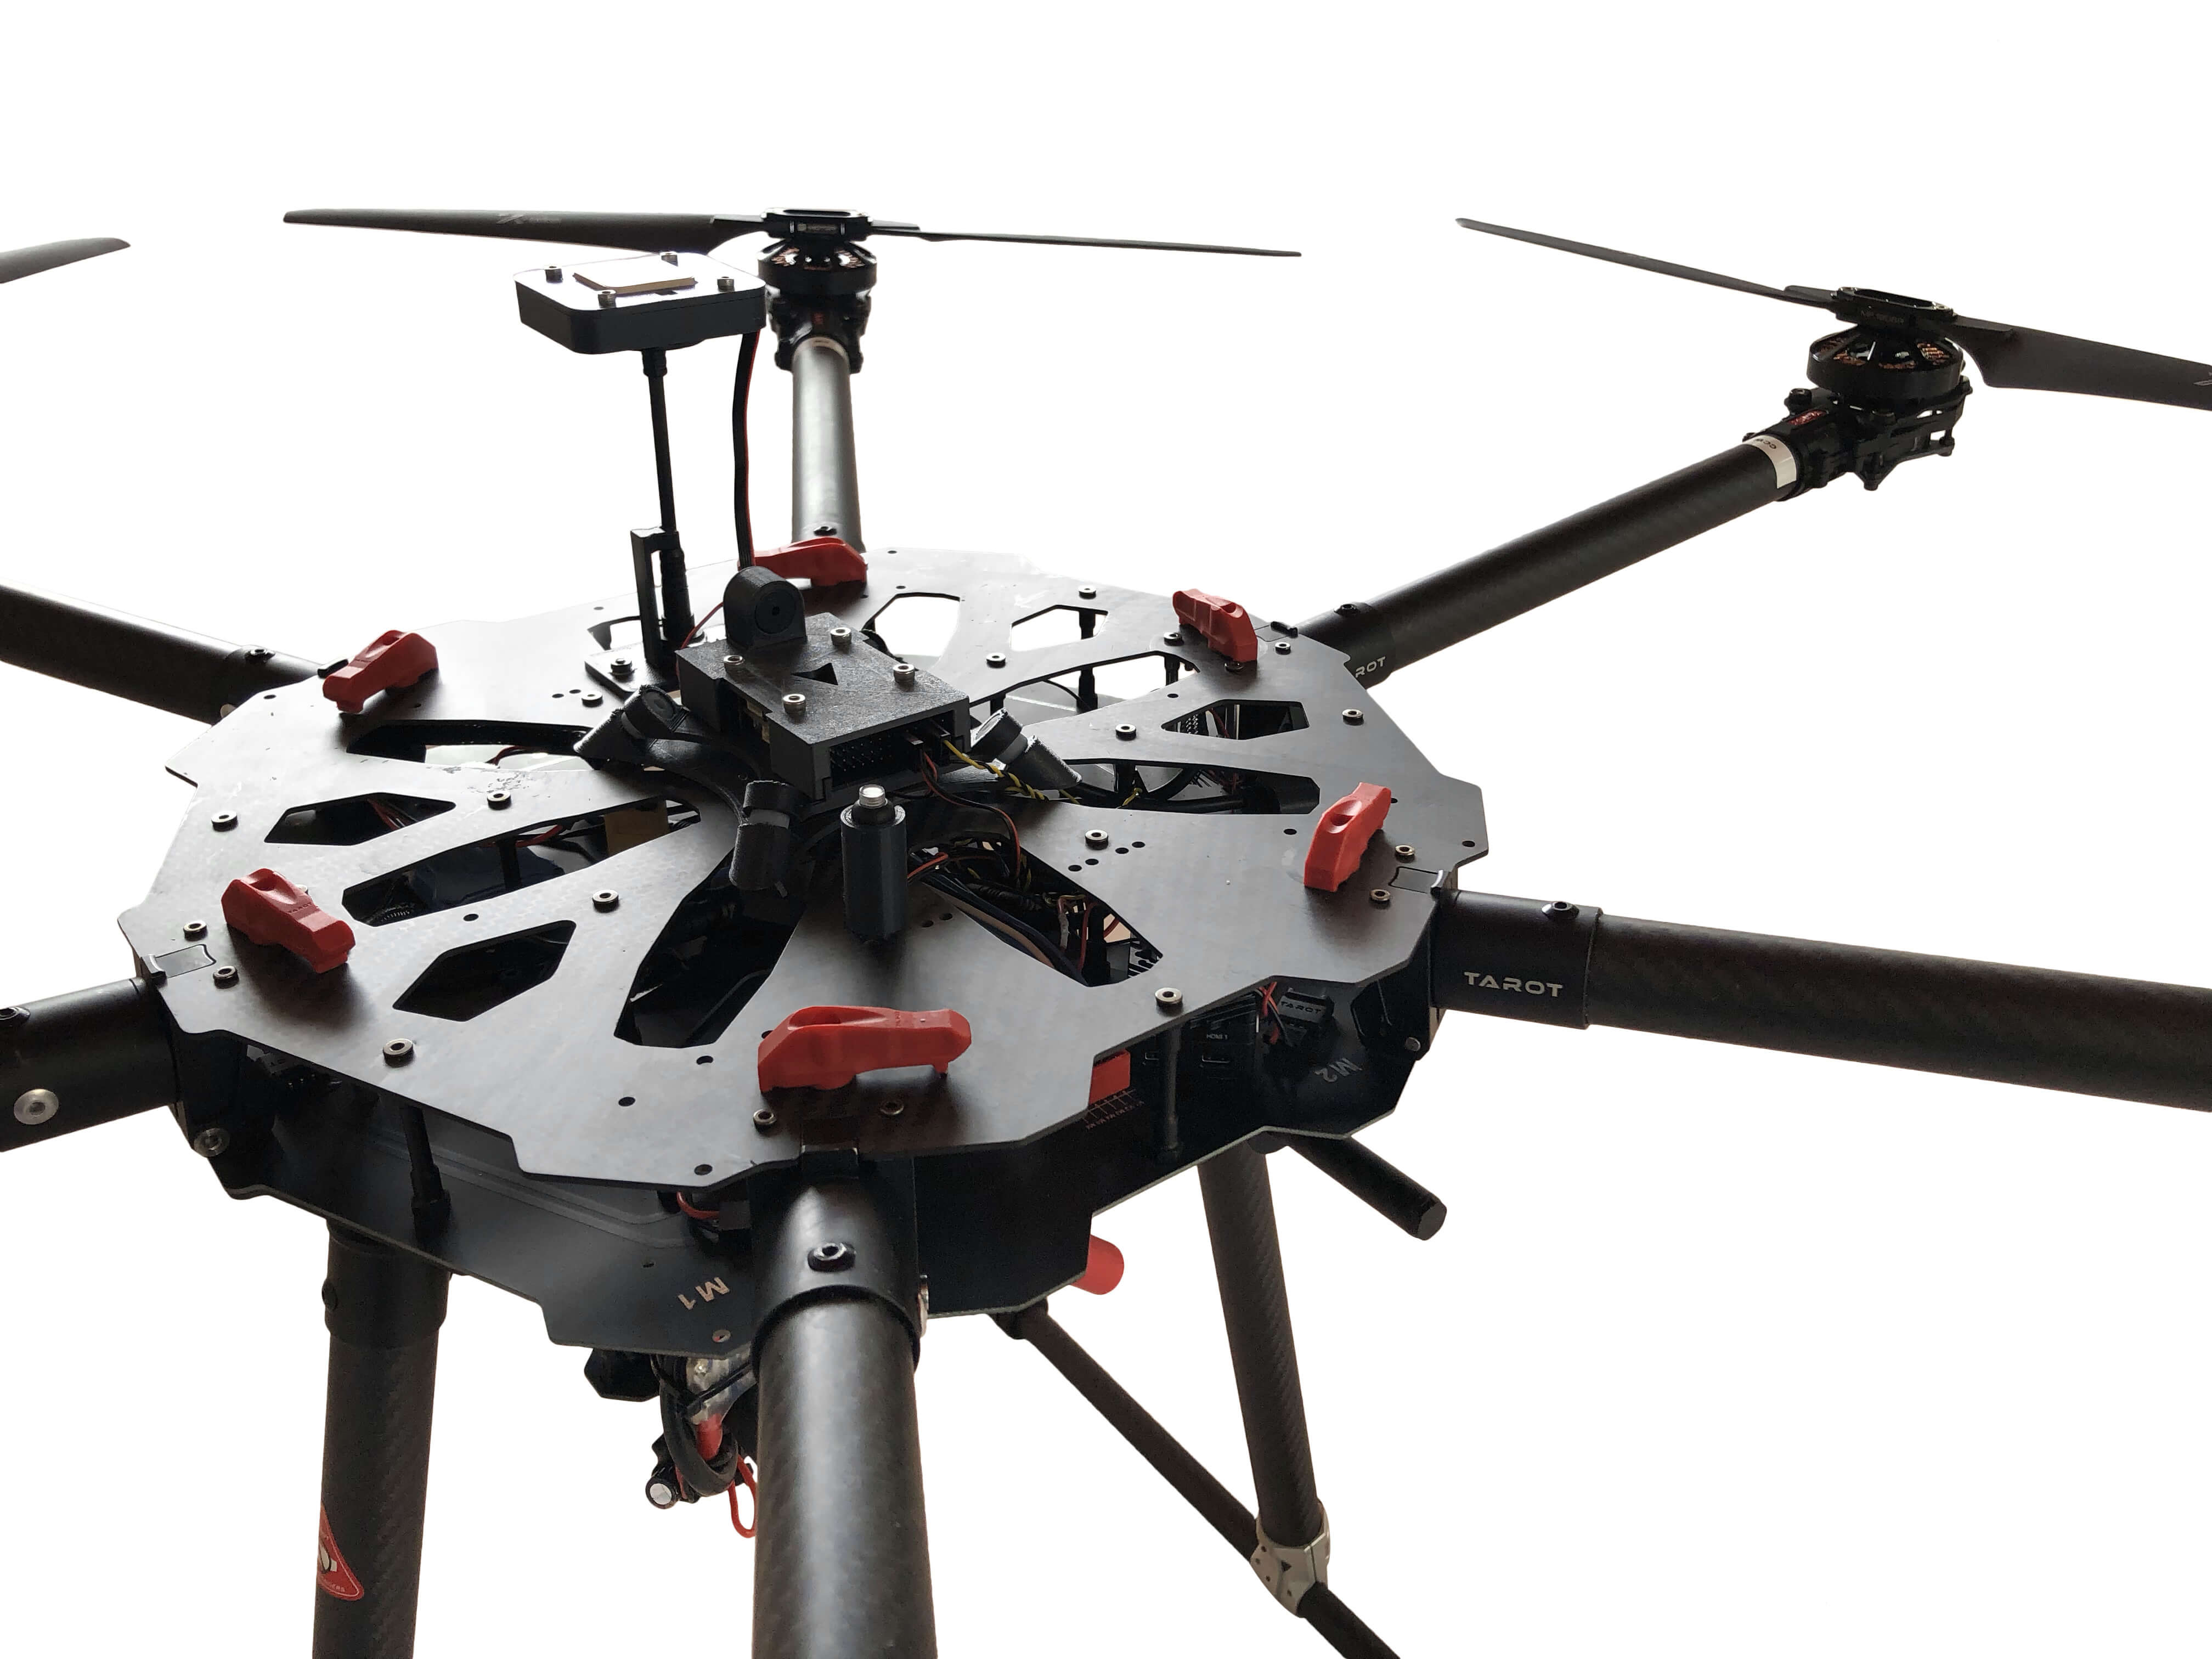 Rotor drone magazine free